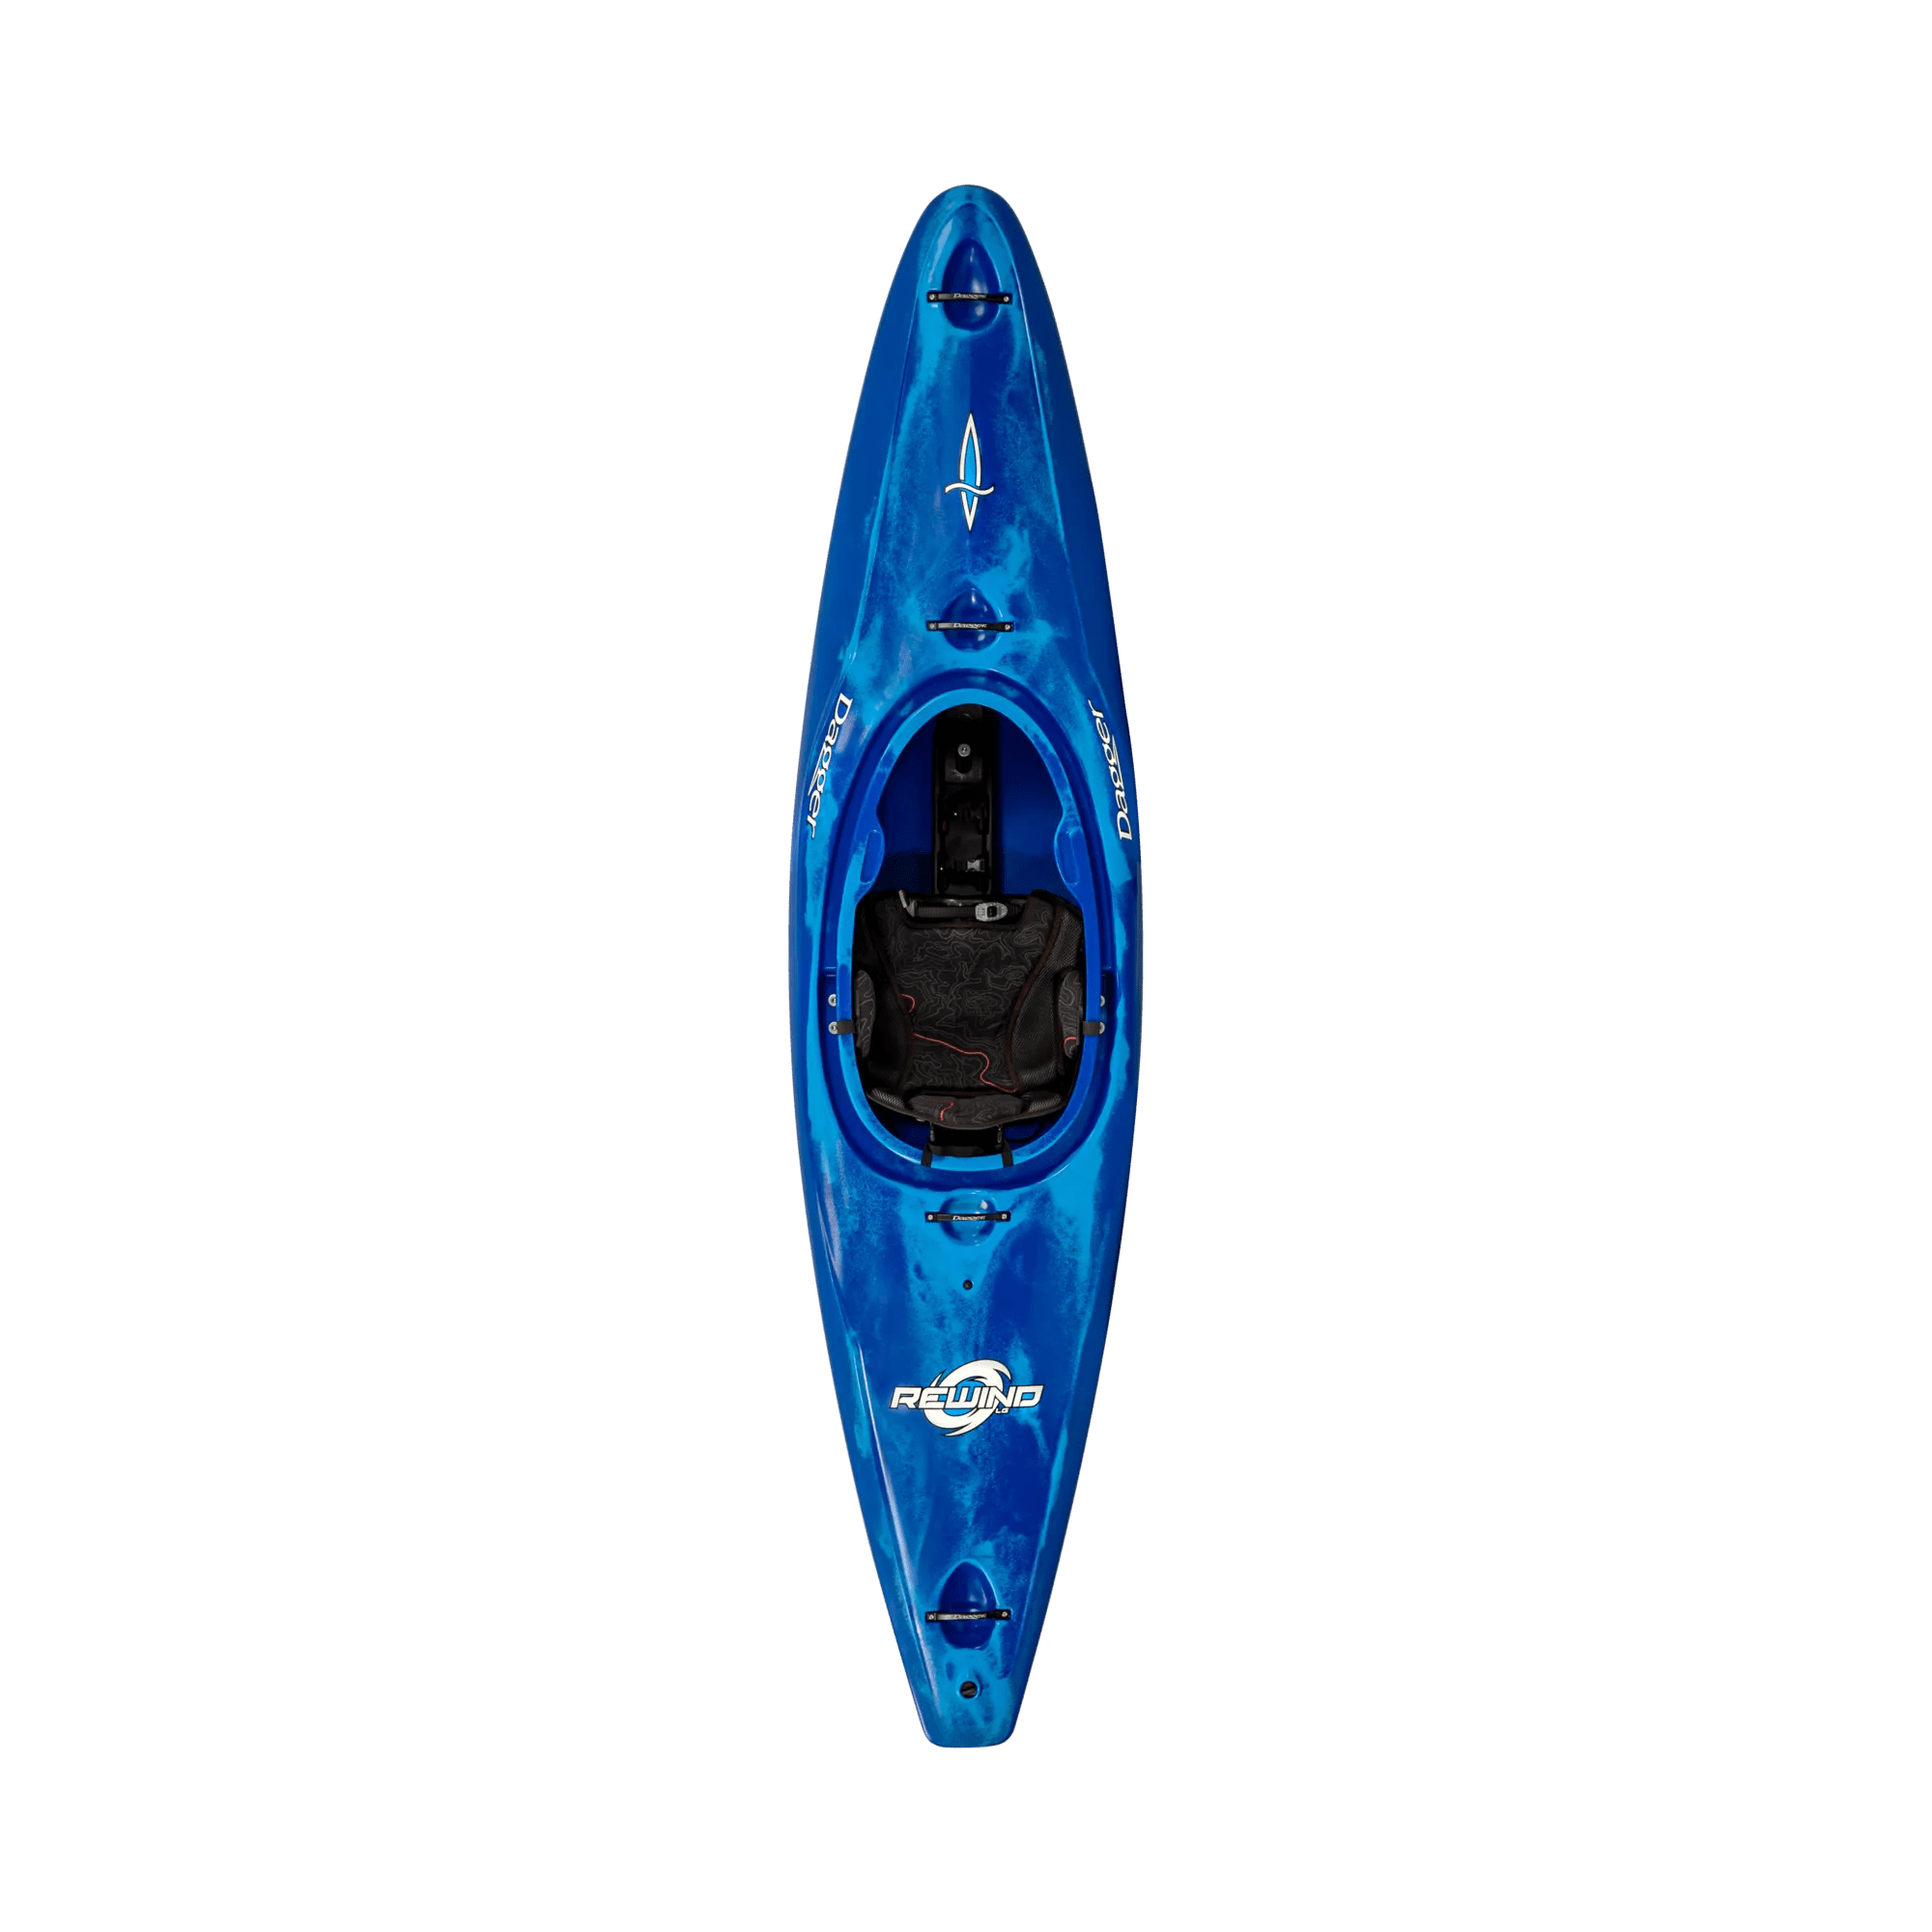 DAGGER - Rewind SM River Play Whitewater Kayak - Blue - 9010474206 - TOP